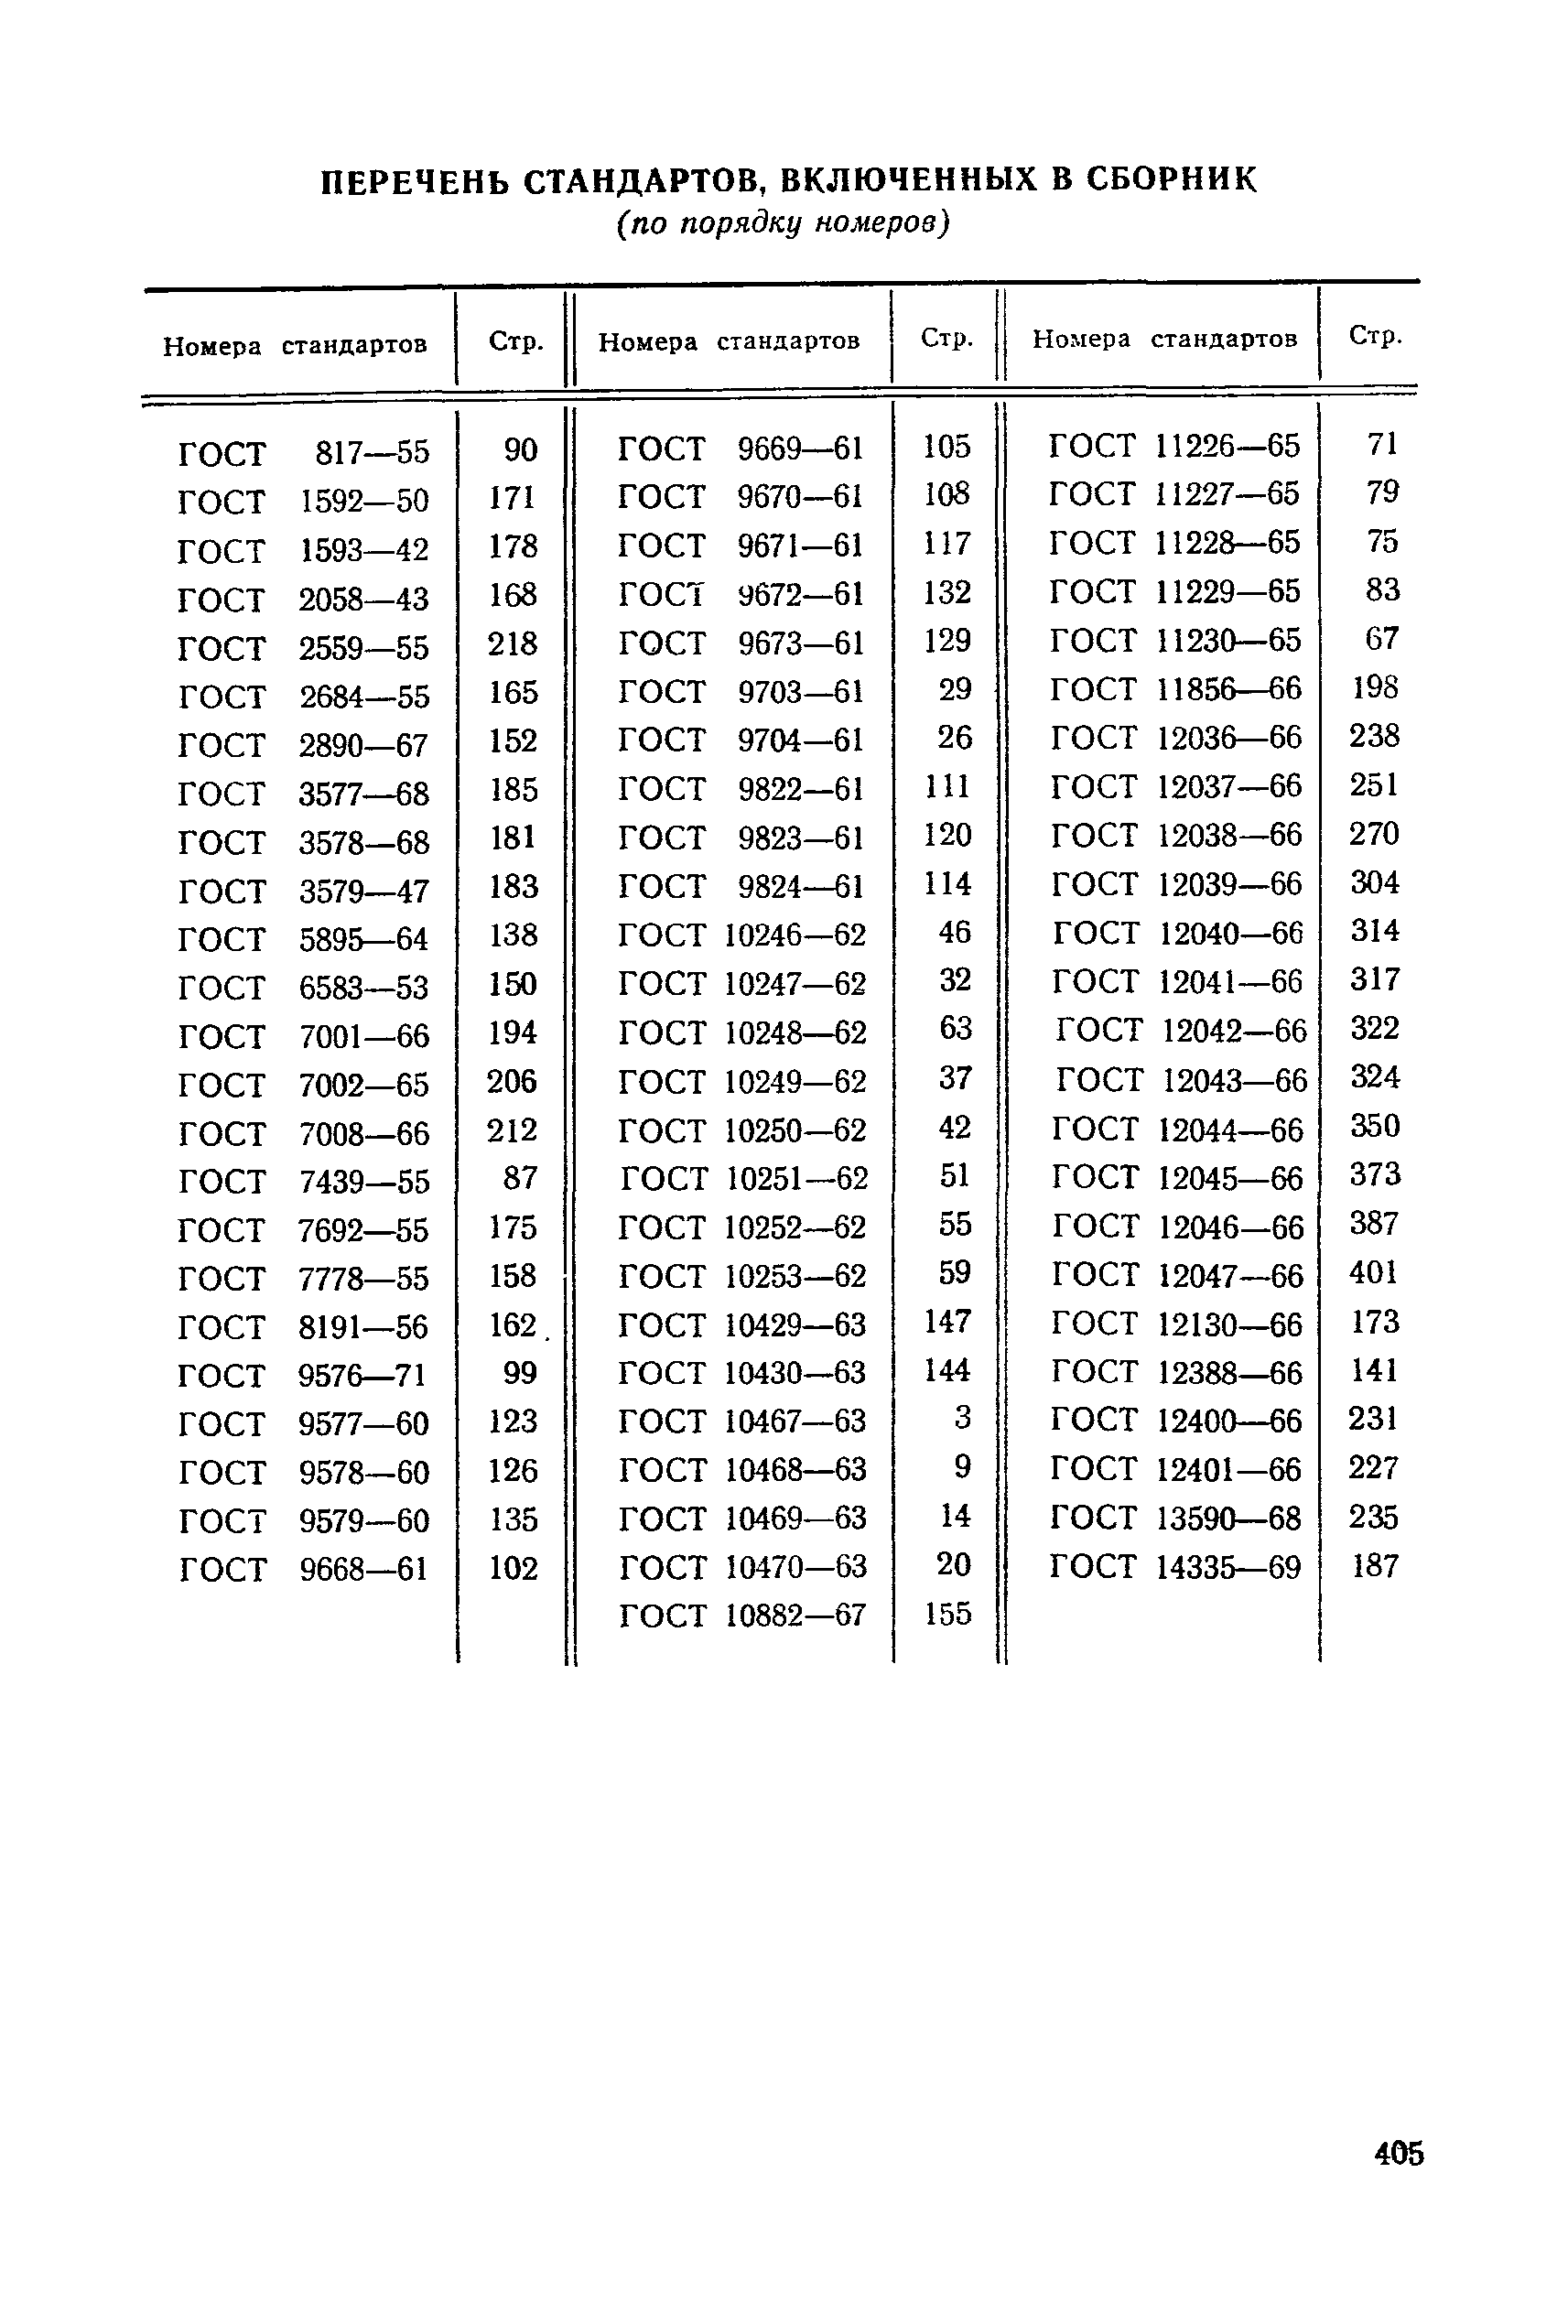 ГОСТ 12041-66